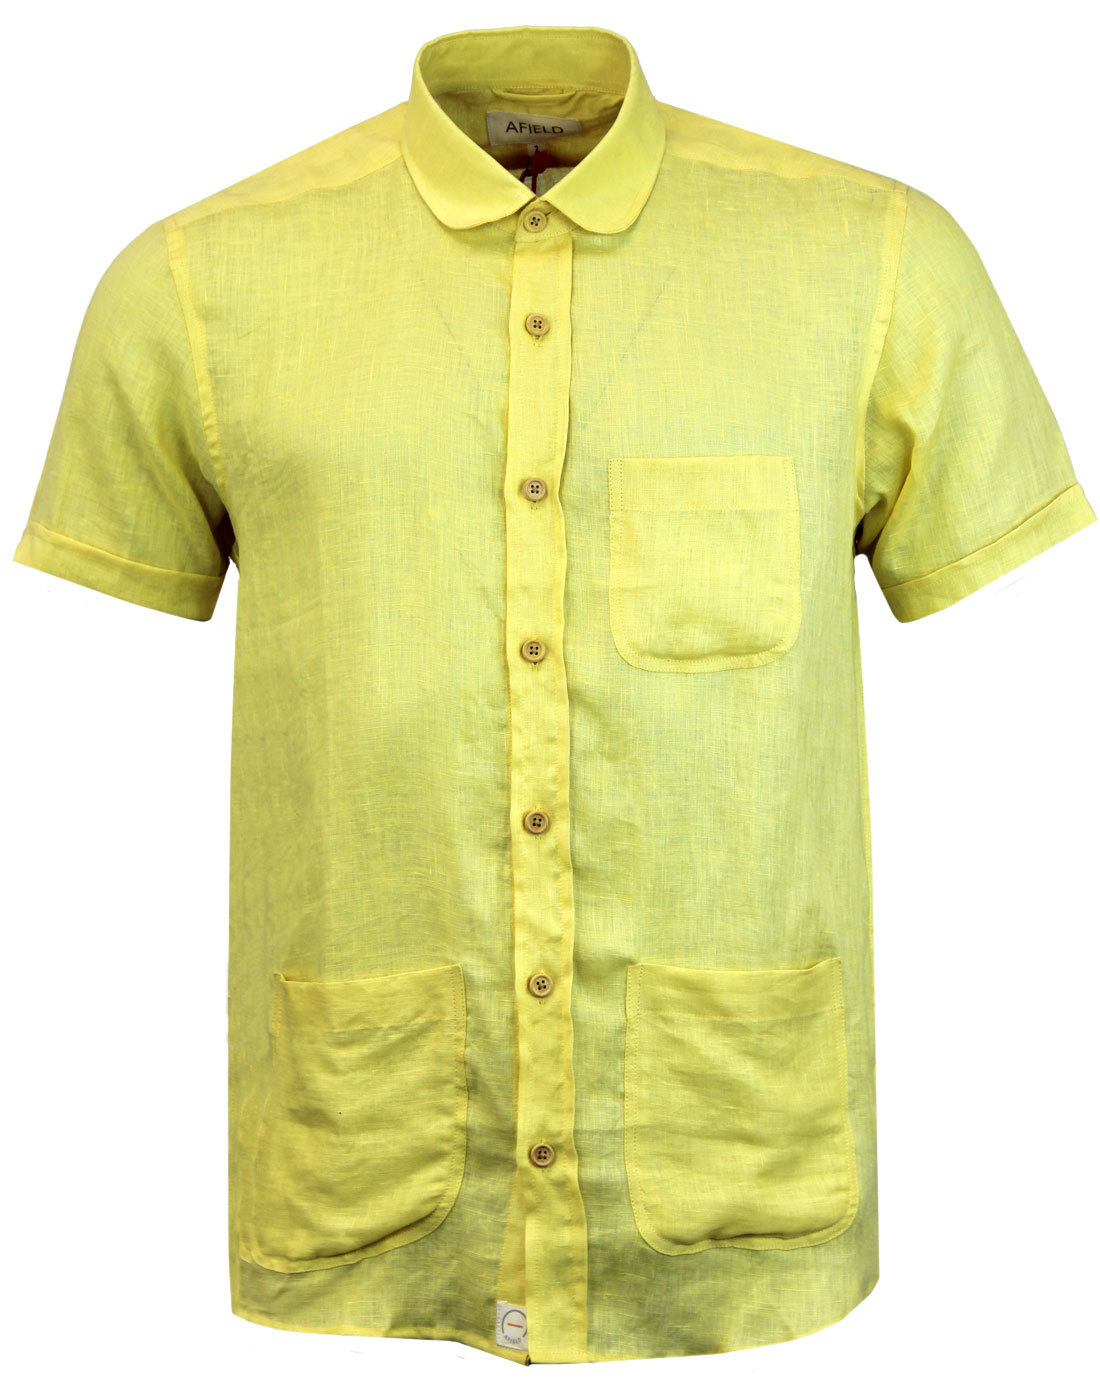 AFIELD Santos Retro 1970s Linen Slub Penny Collar Summer Shirt